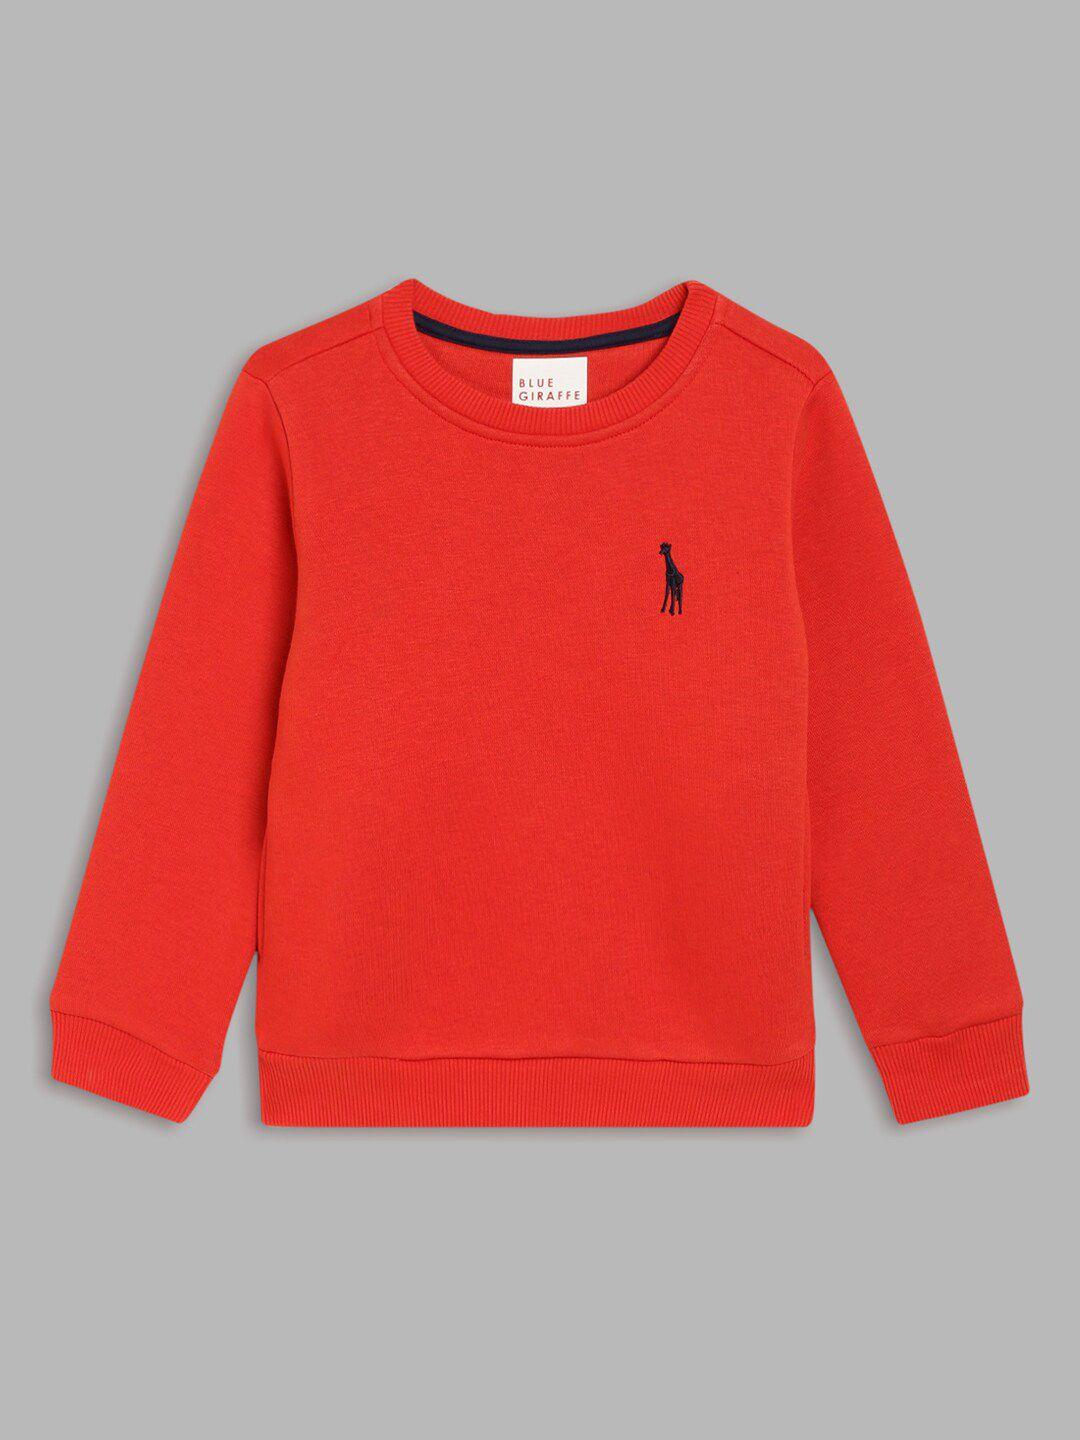 blue-giraffe-boys-red-cotton-sweatshirt